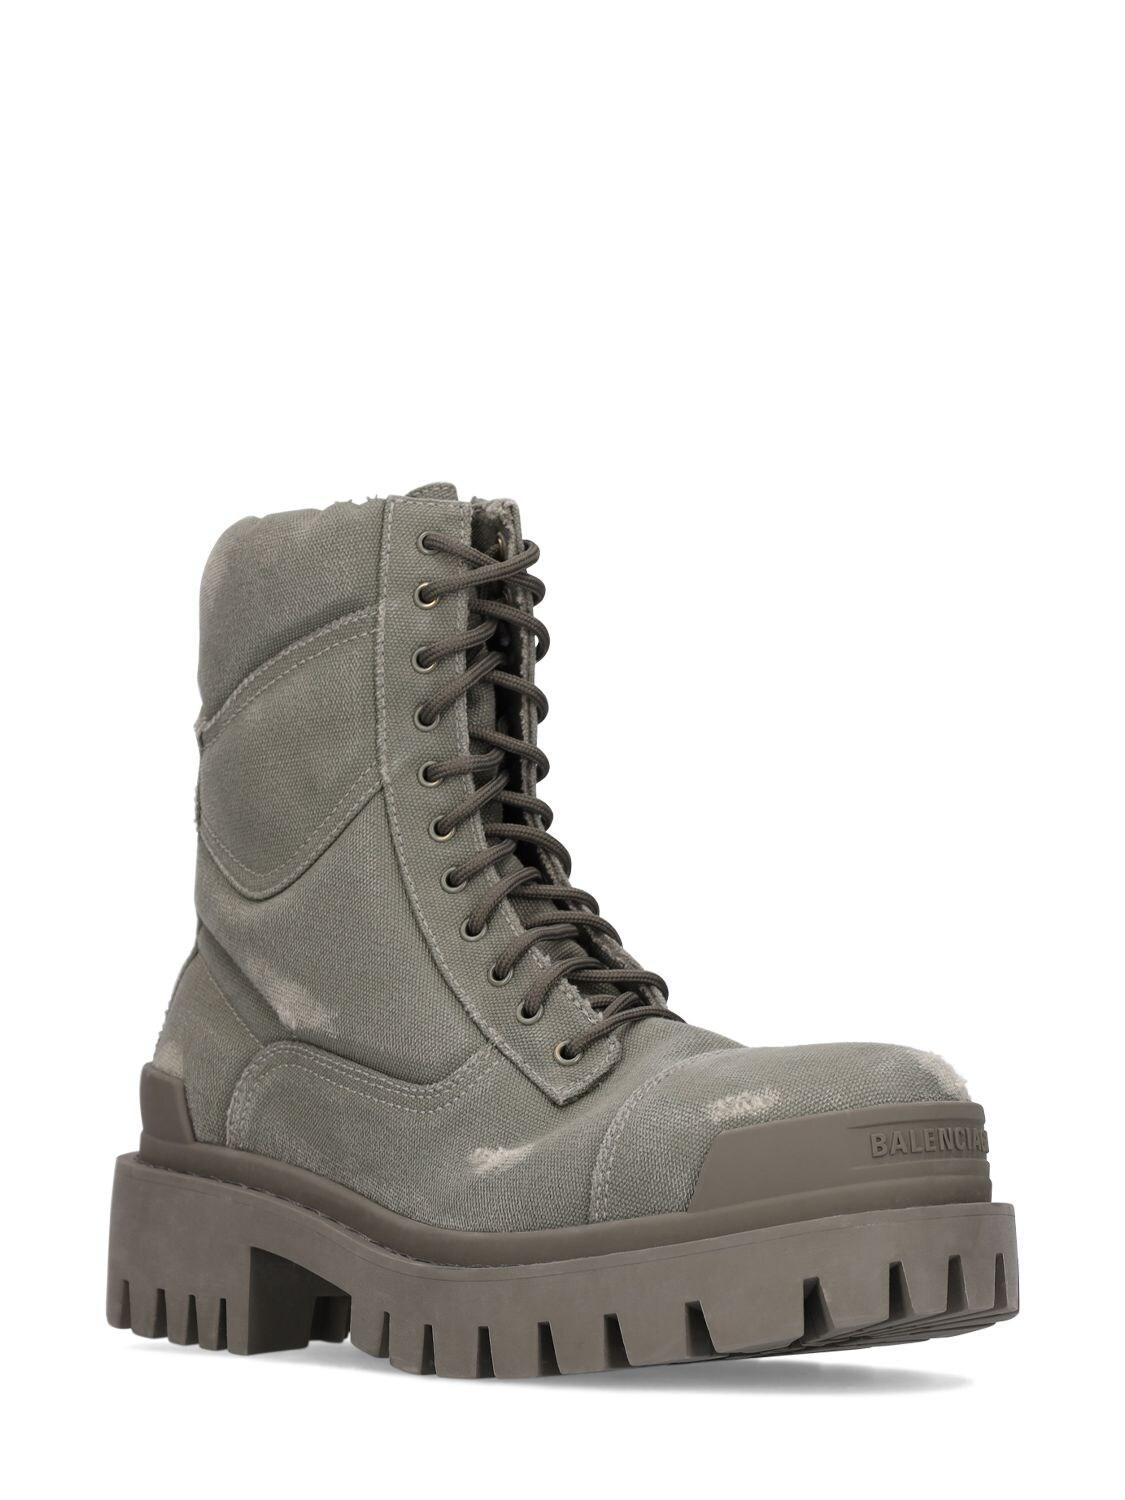 Balenciaga Strike Cotton Canvas Combat Boots in Gray | Lyst